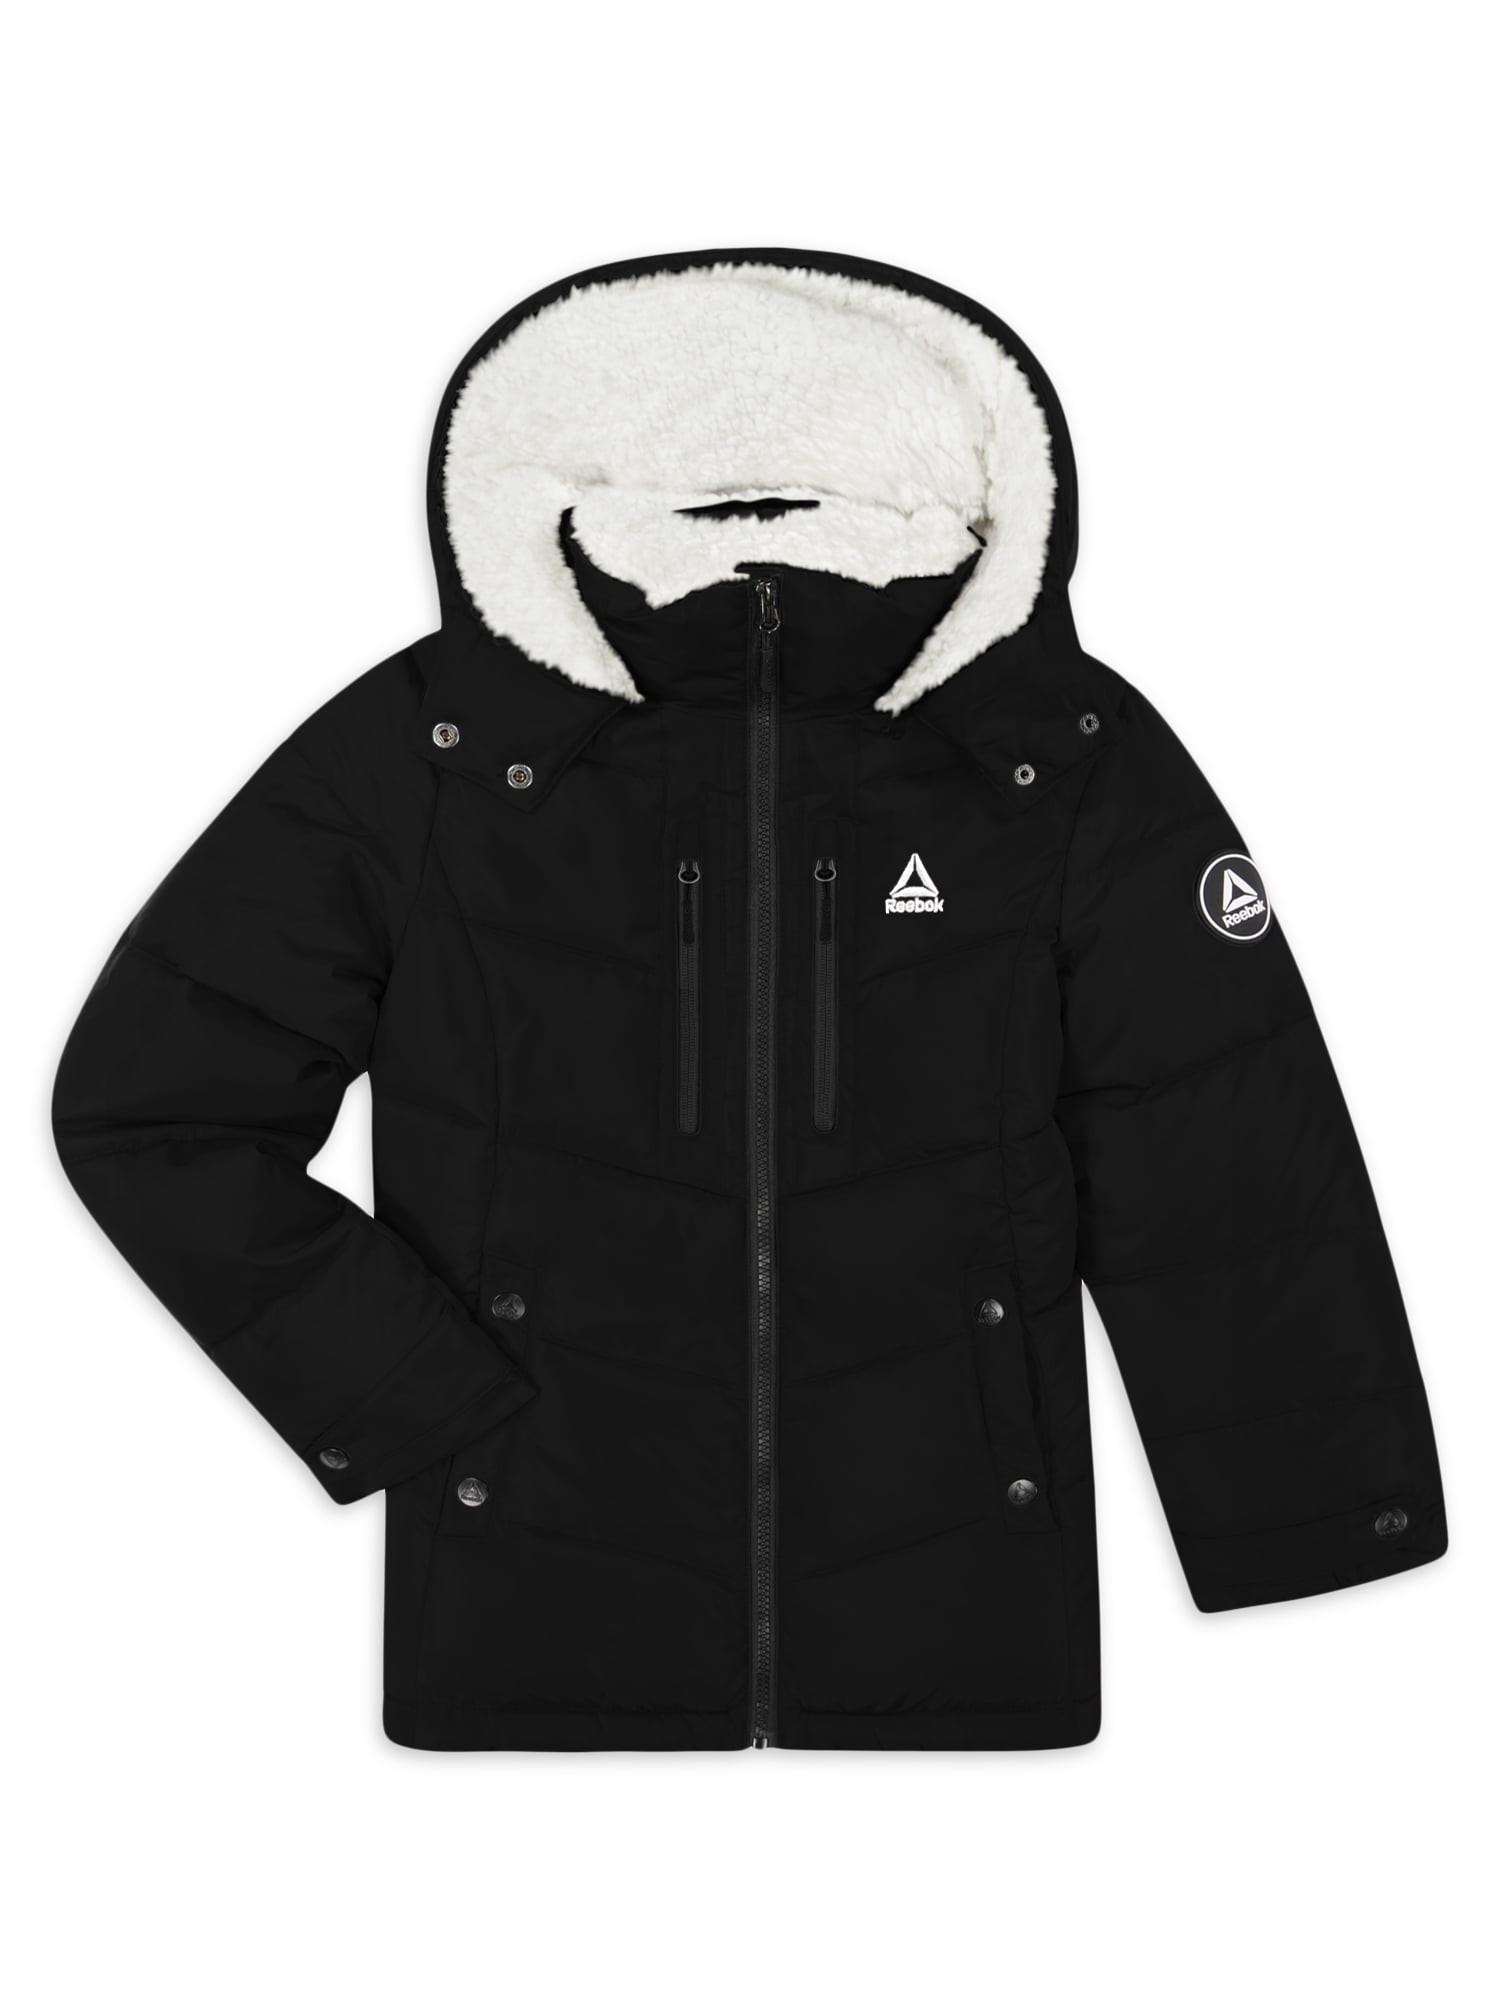 Reebok Girls' Insulated Jacket - black/multi, 4t (Toddler) - Walmart.com